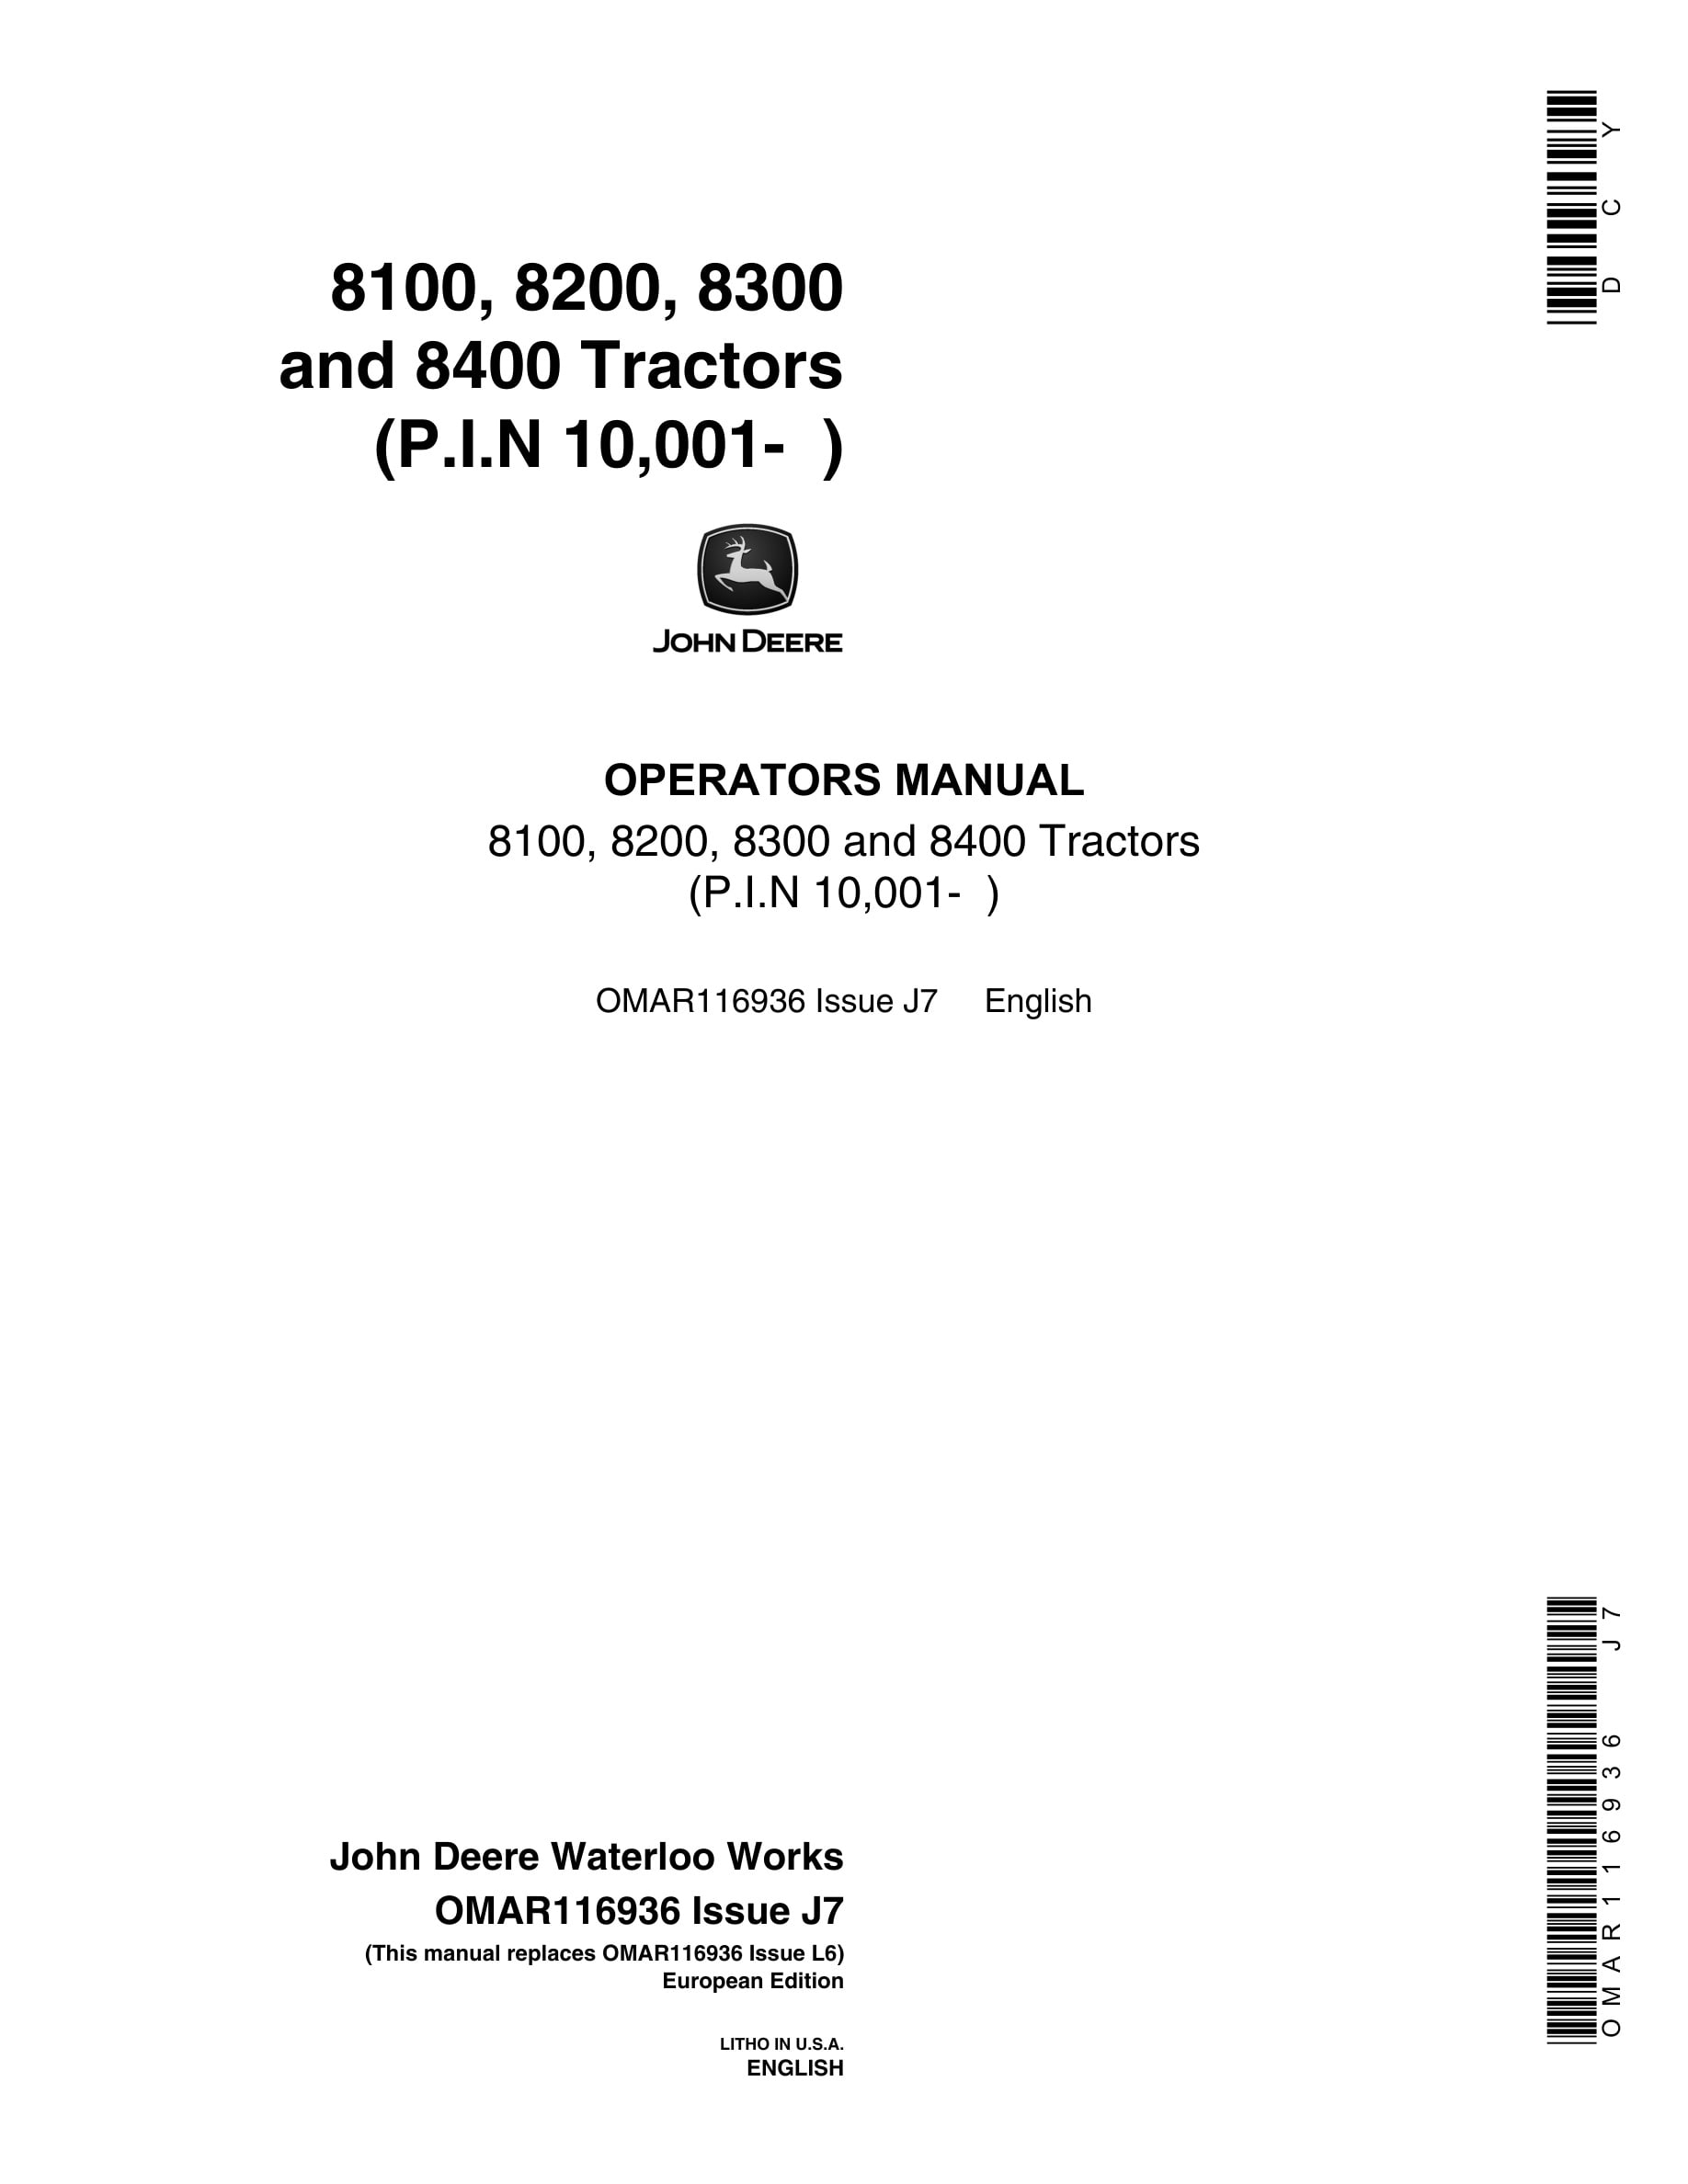 John Deere 8100, 8200, 8300 And 8400 Tractors Operator Manuals OMAR116936-1